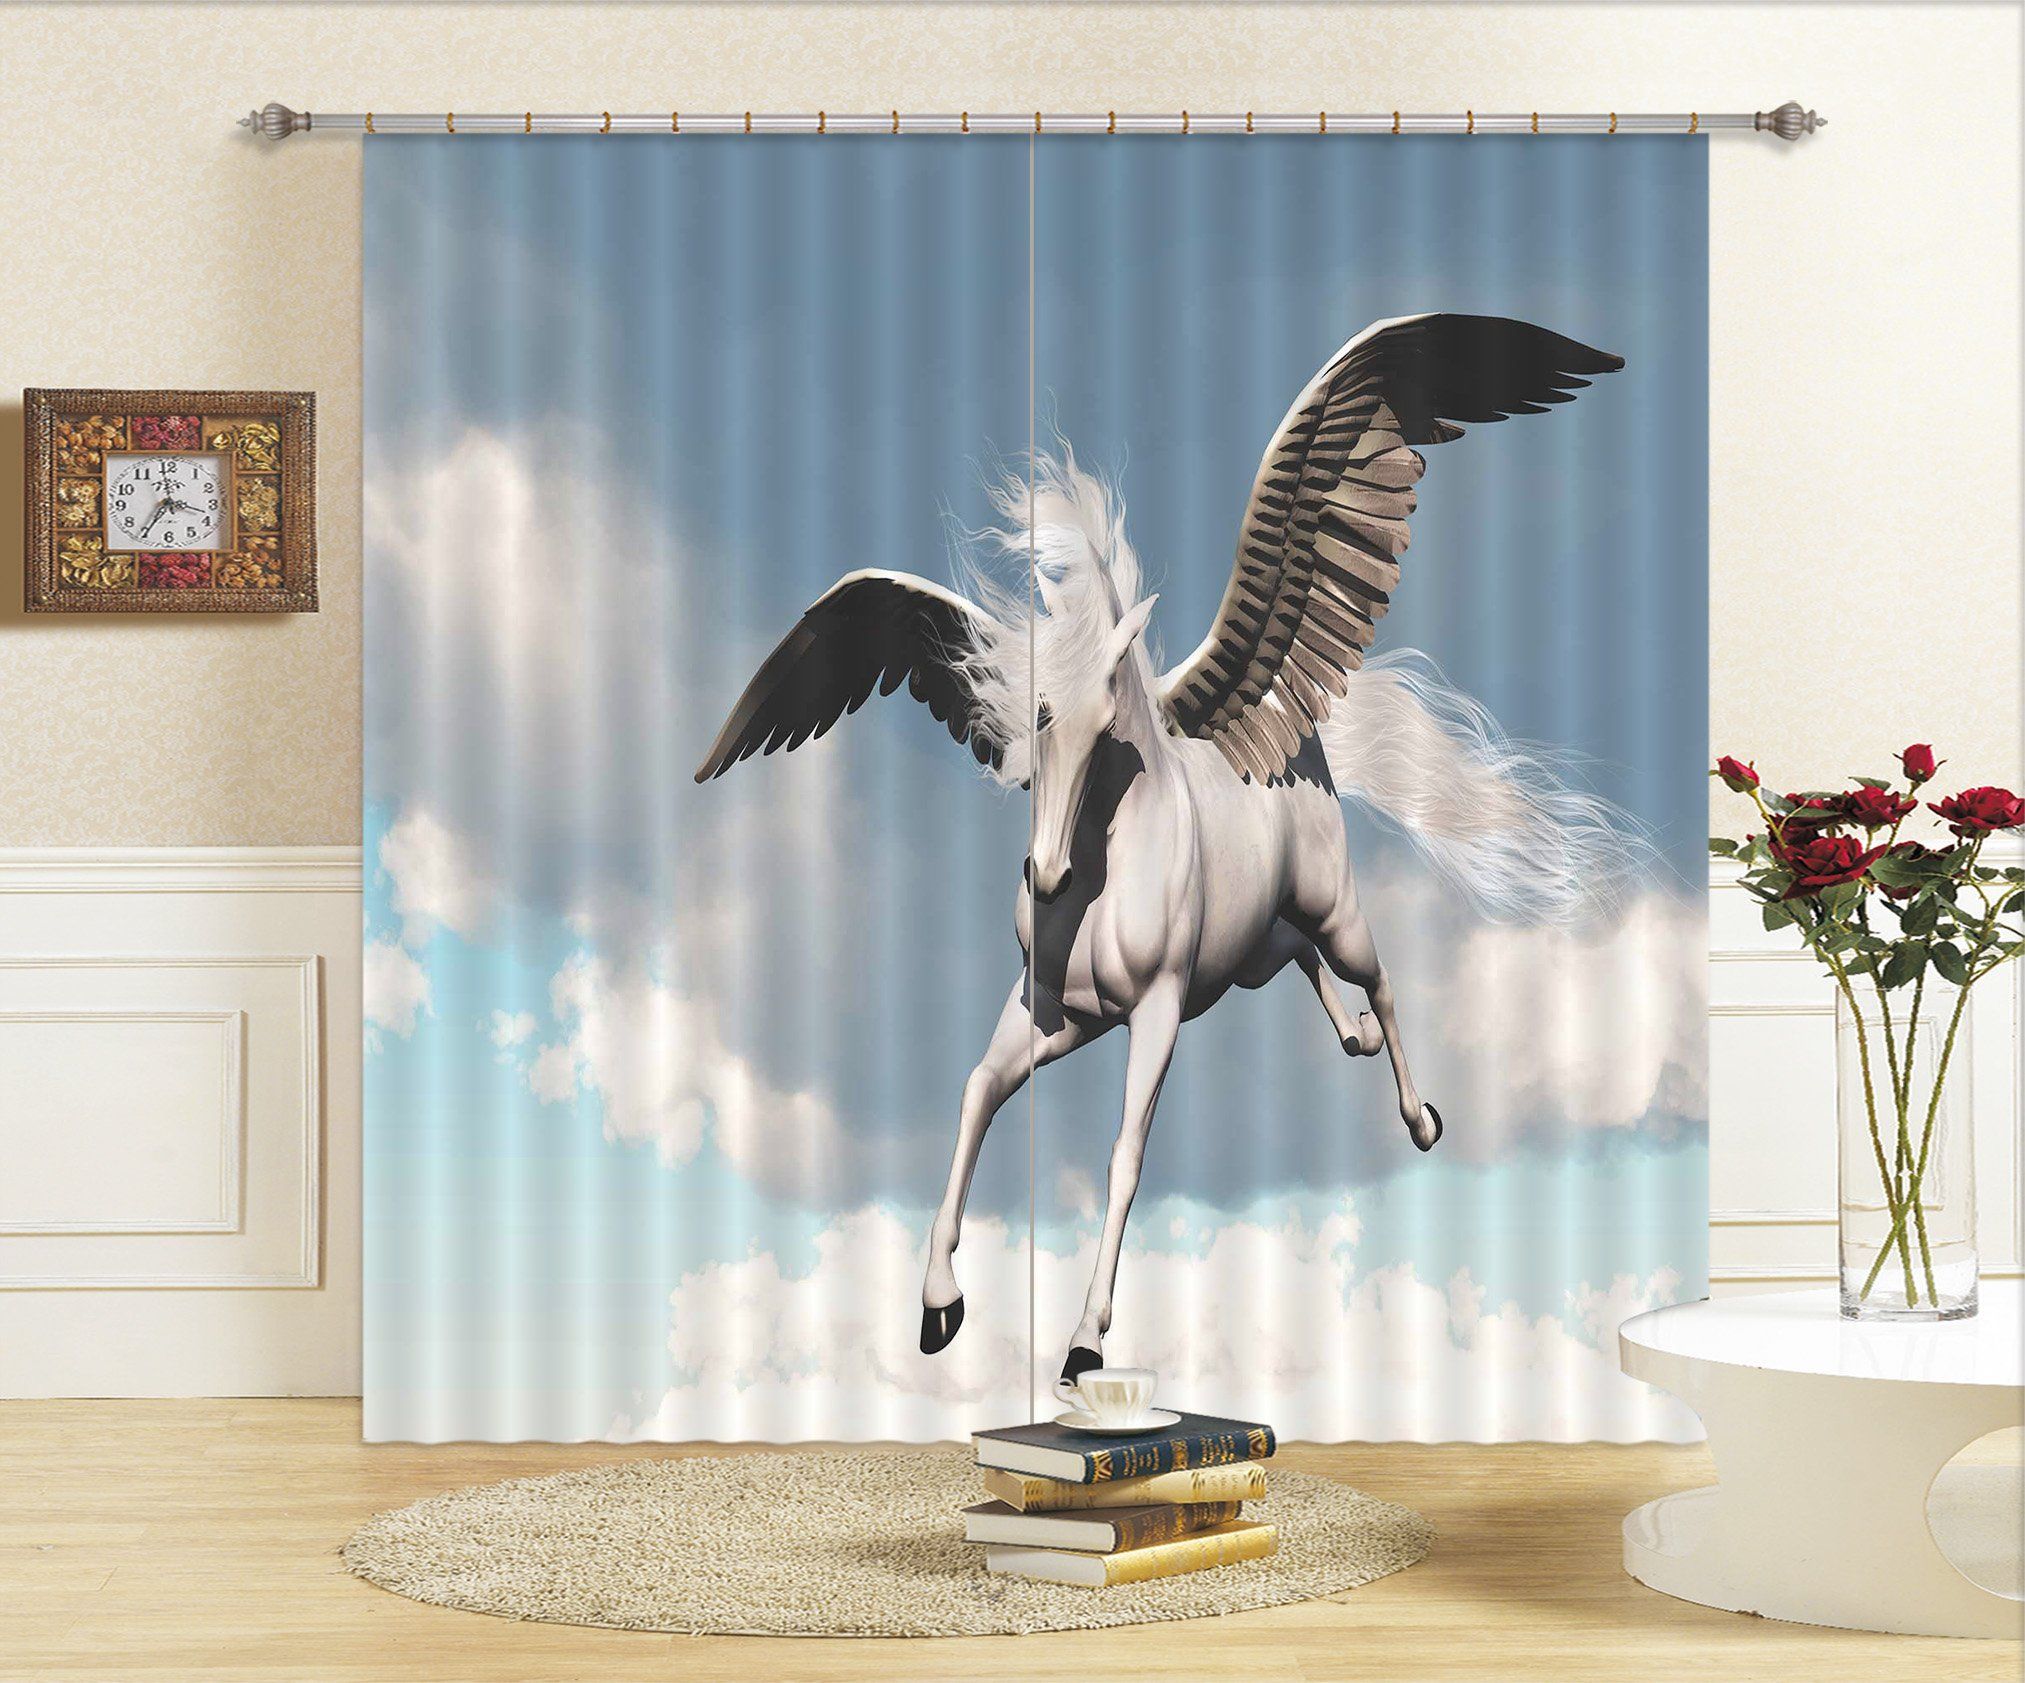 3D Flying Wings Unicorns 095 Curtains Drapes Curtains AJ Creativity Home 